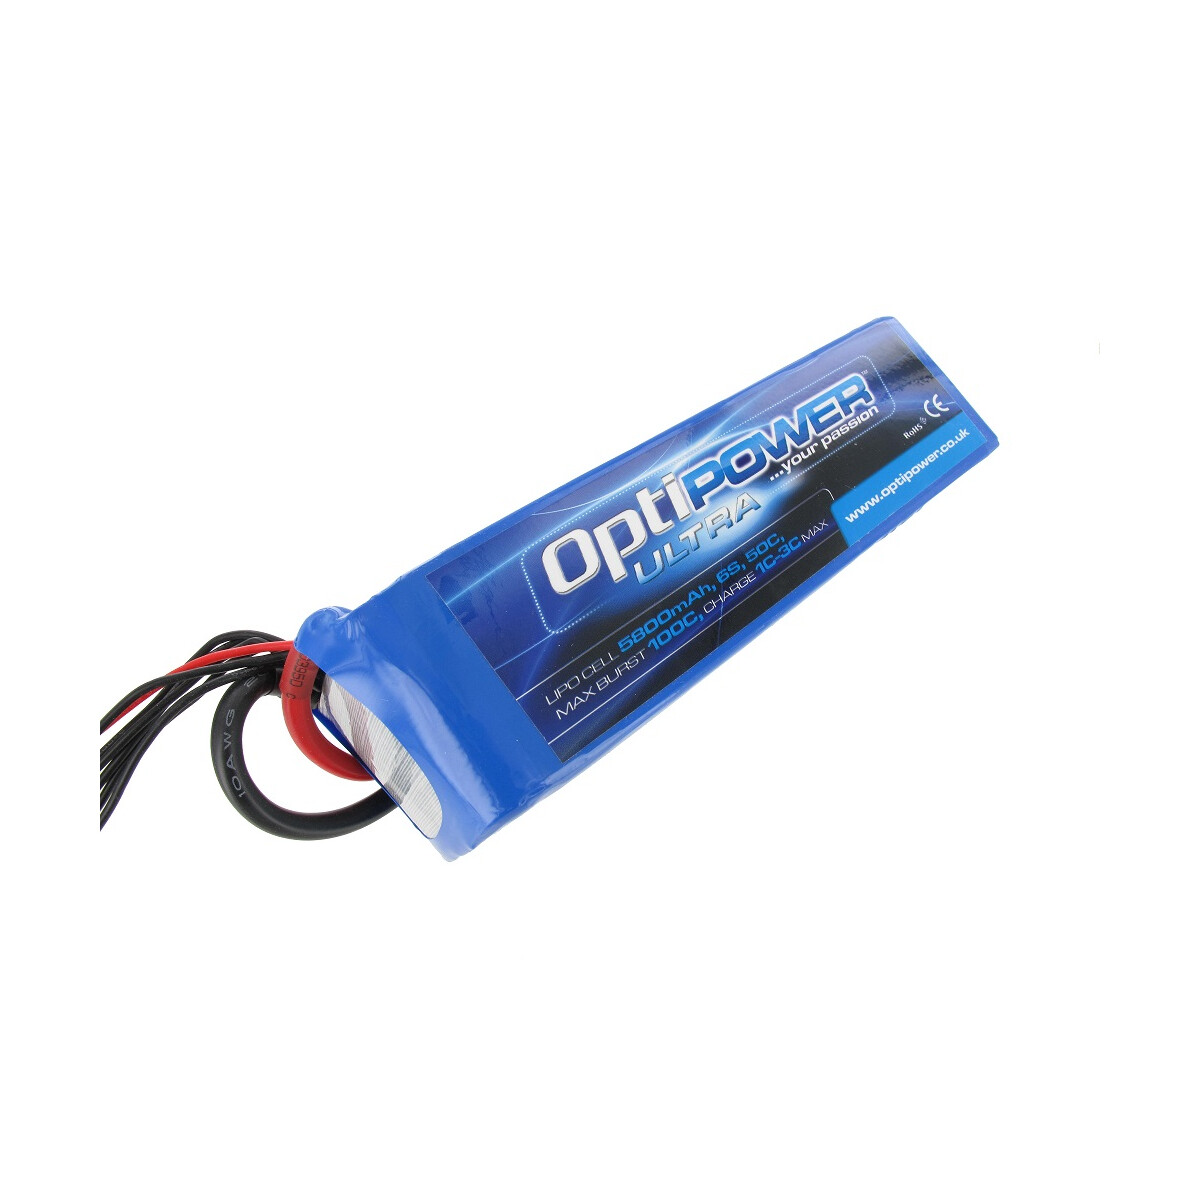 OptiPower Ultra 50C Lipo Cell Battery 5800mAh 6S 50C